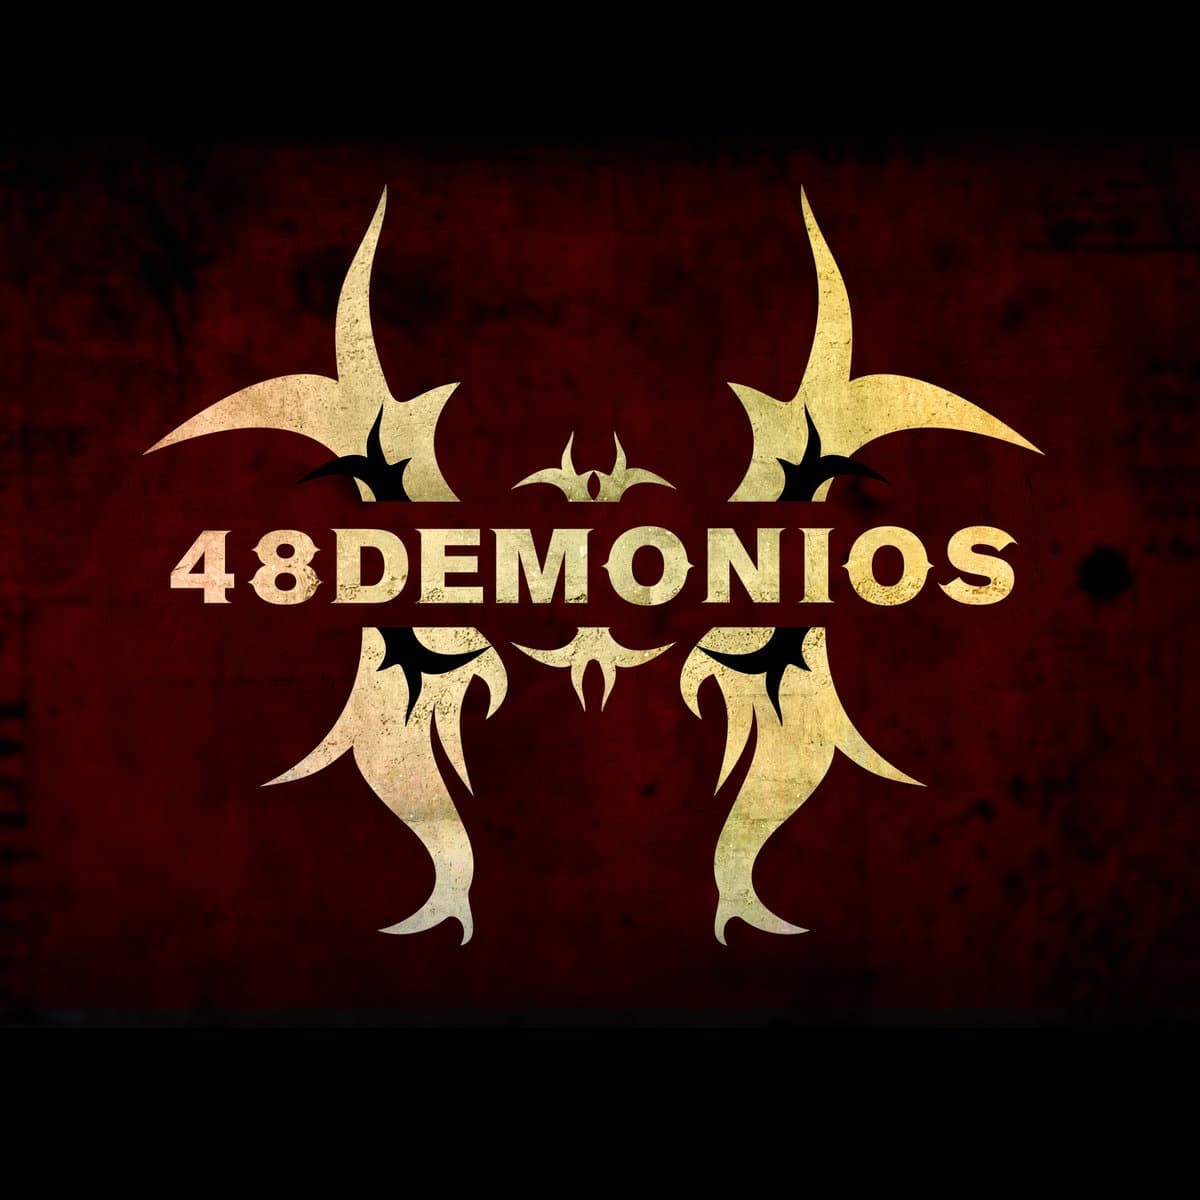 48 demonios